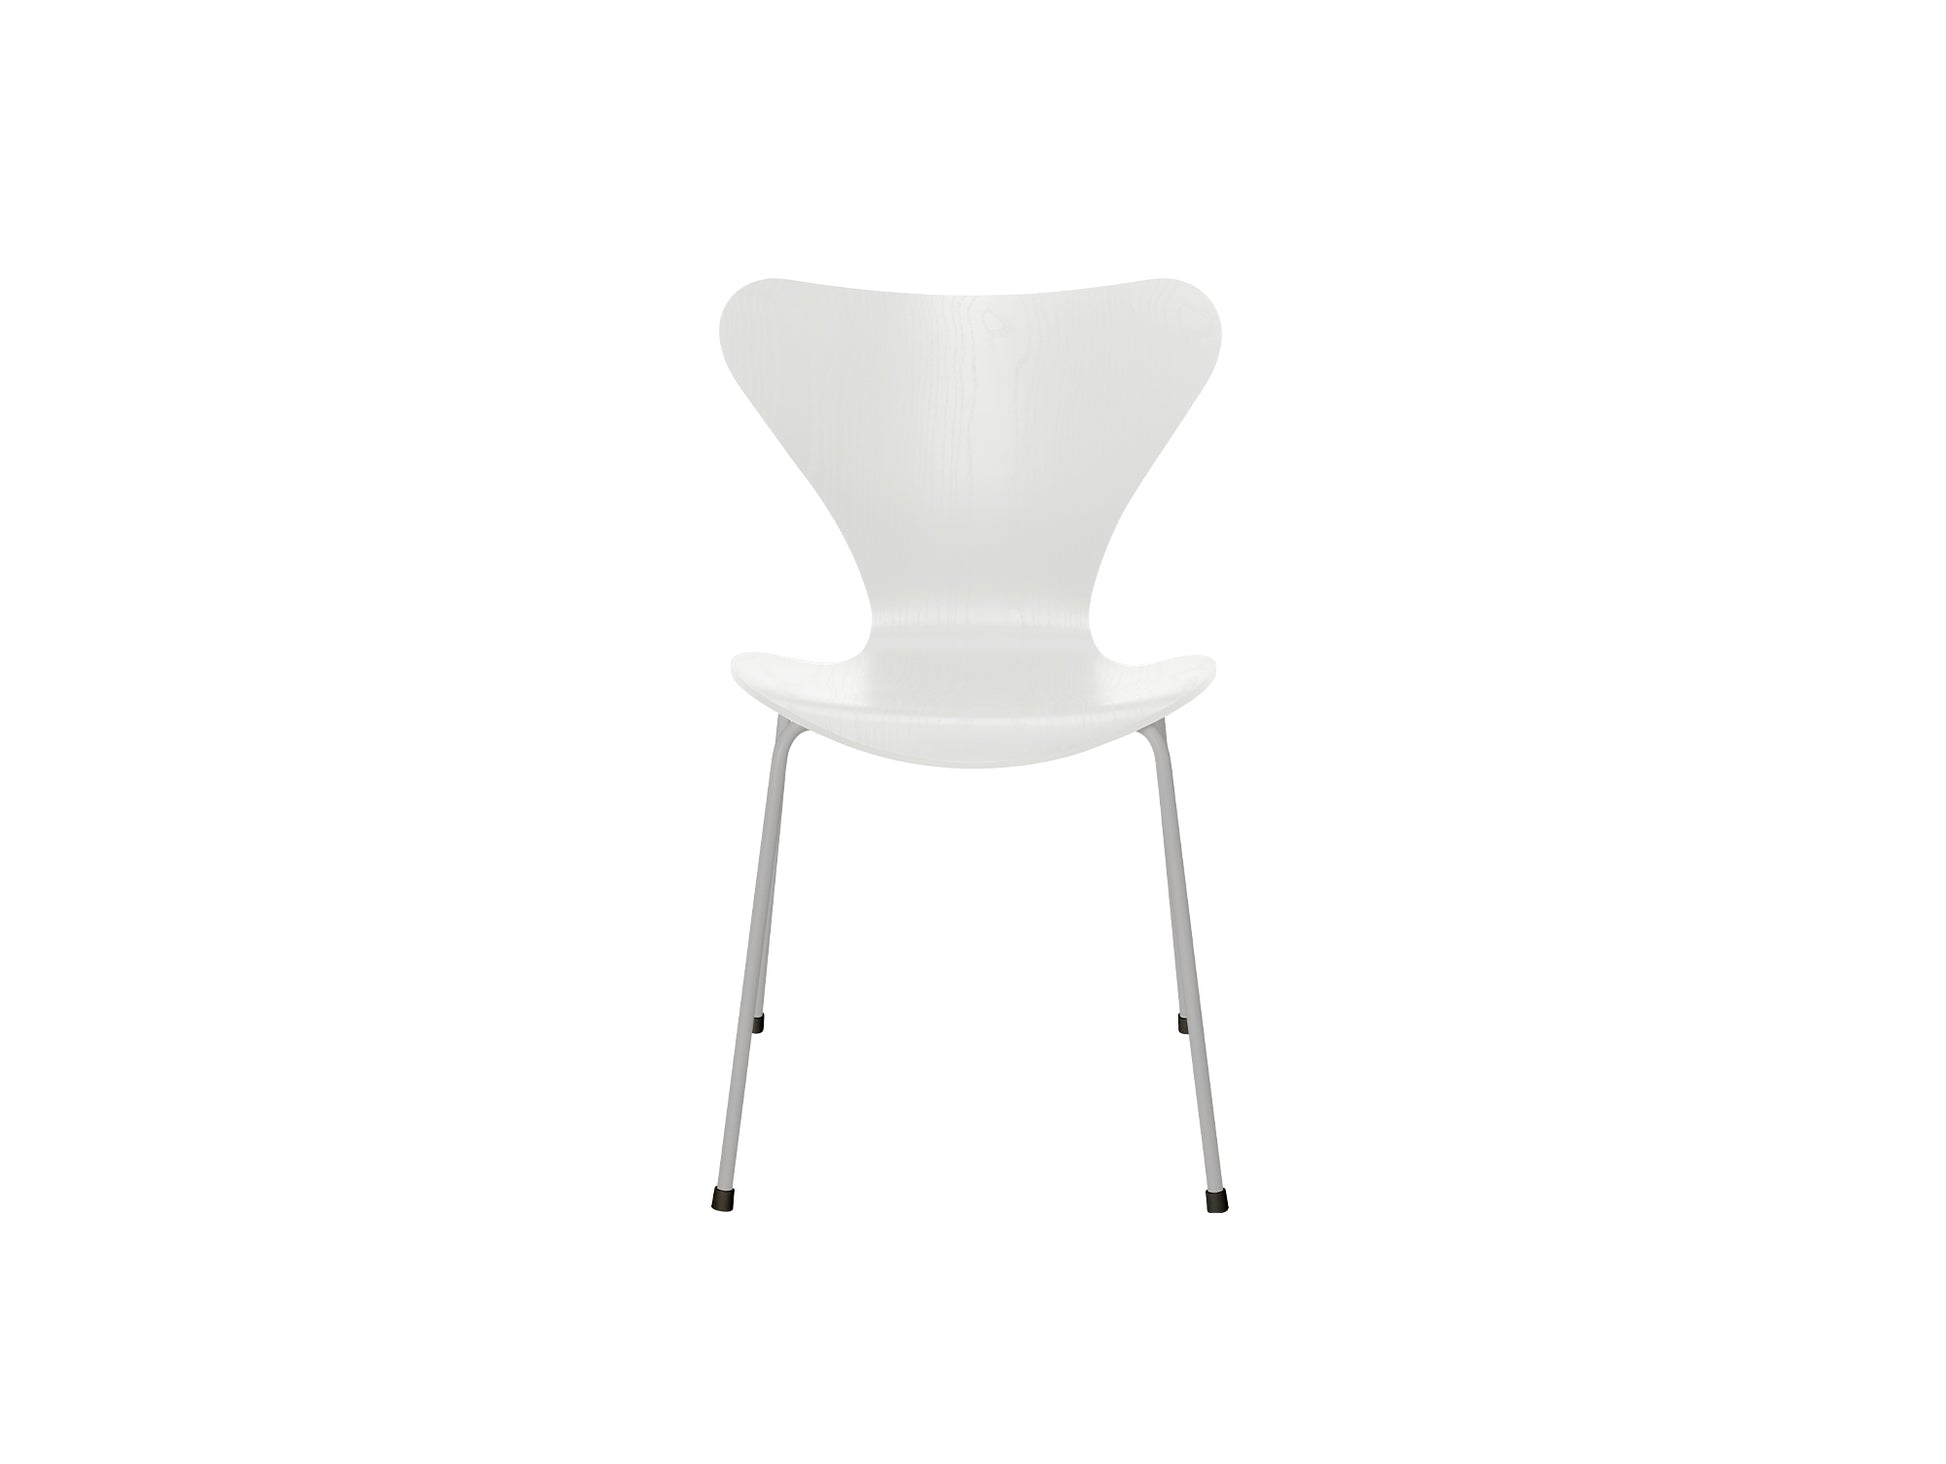 Series 7™ 3107 Dining Chair by Fritz Hansen - White Coloured Ash Veneer Shell / Nine Grey Steel